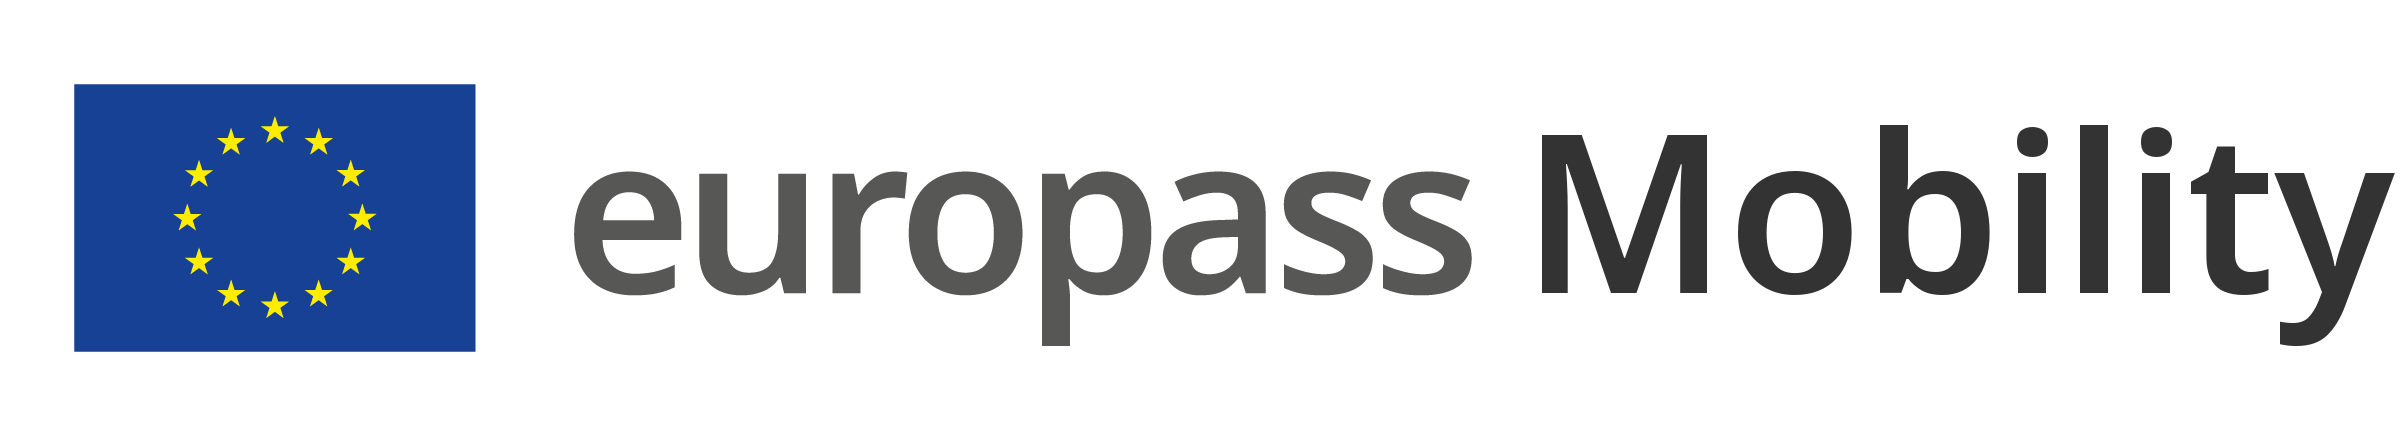 Logo europass mobility